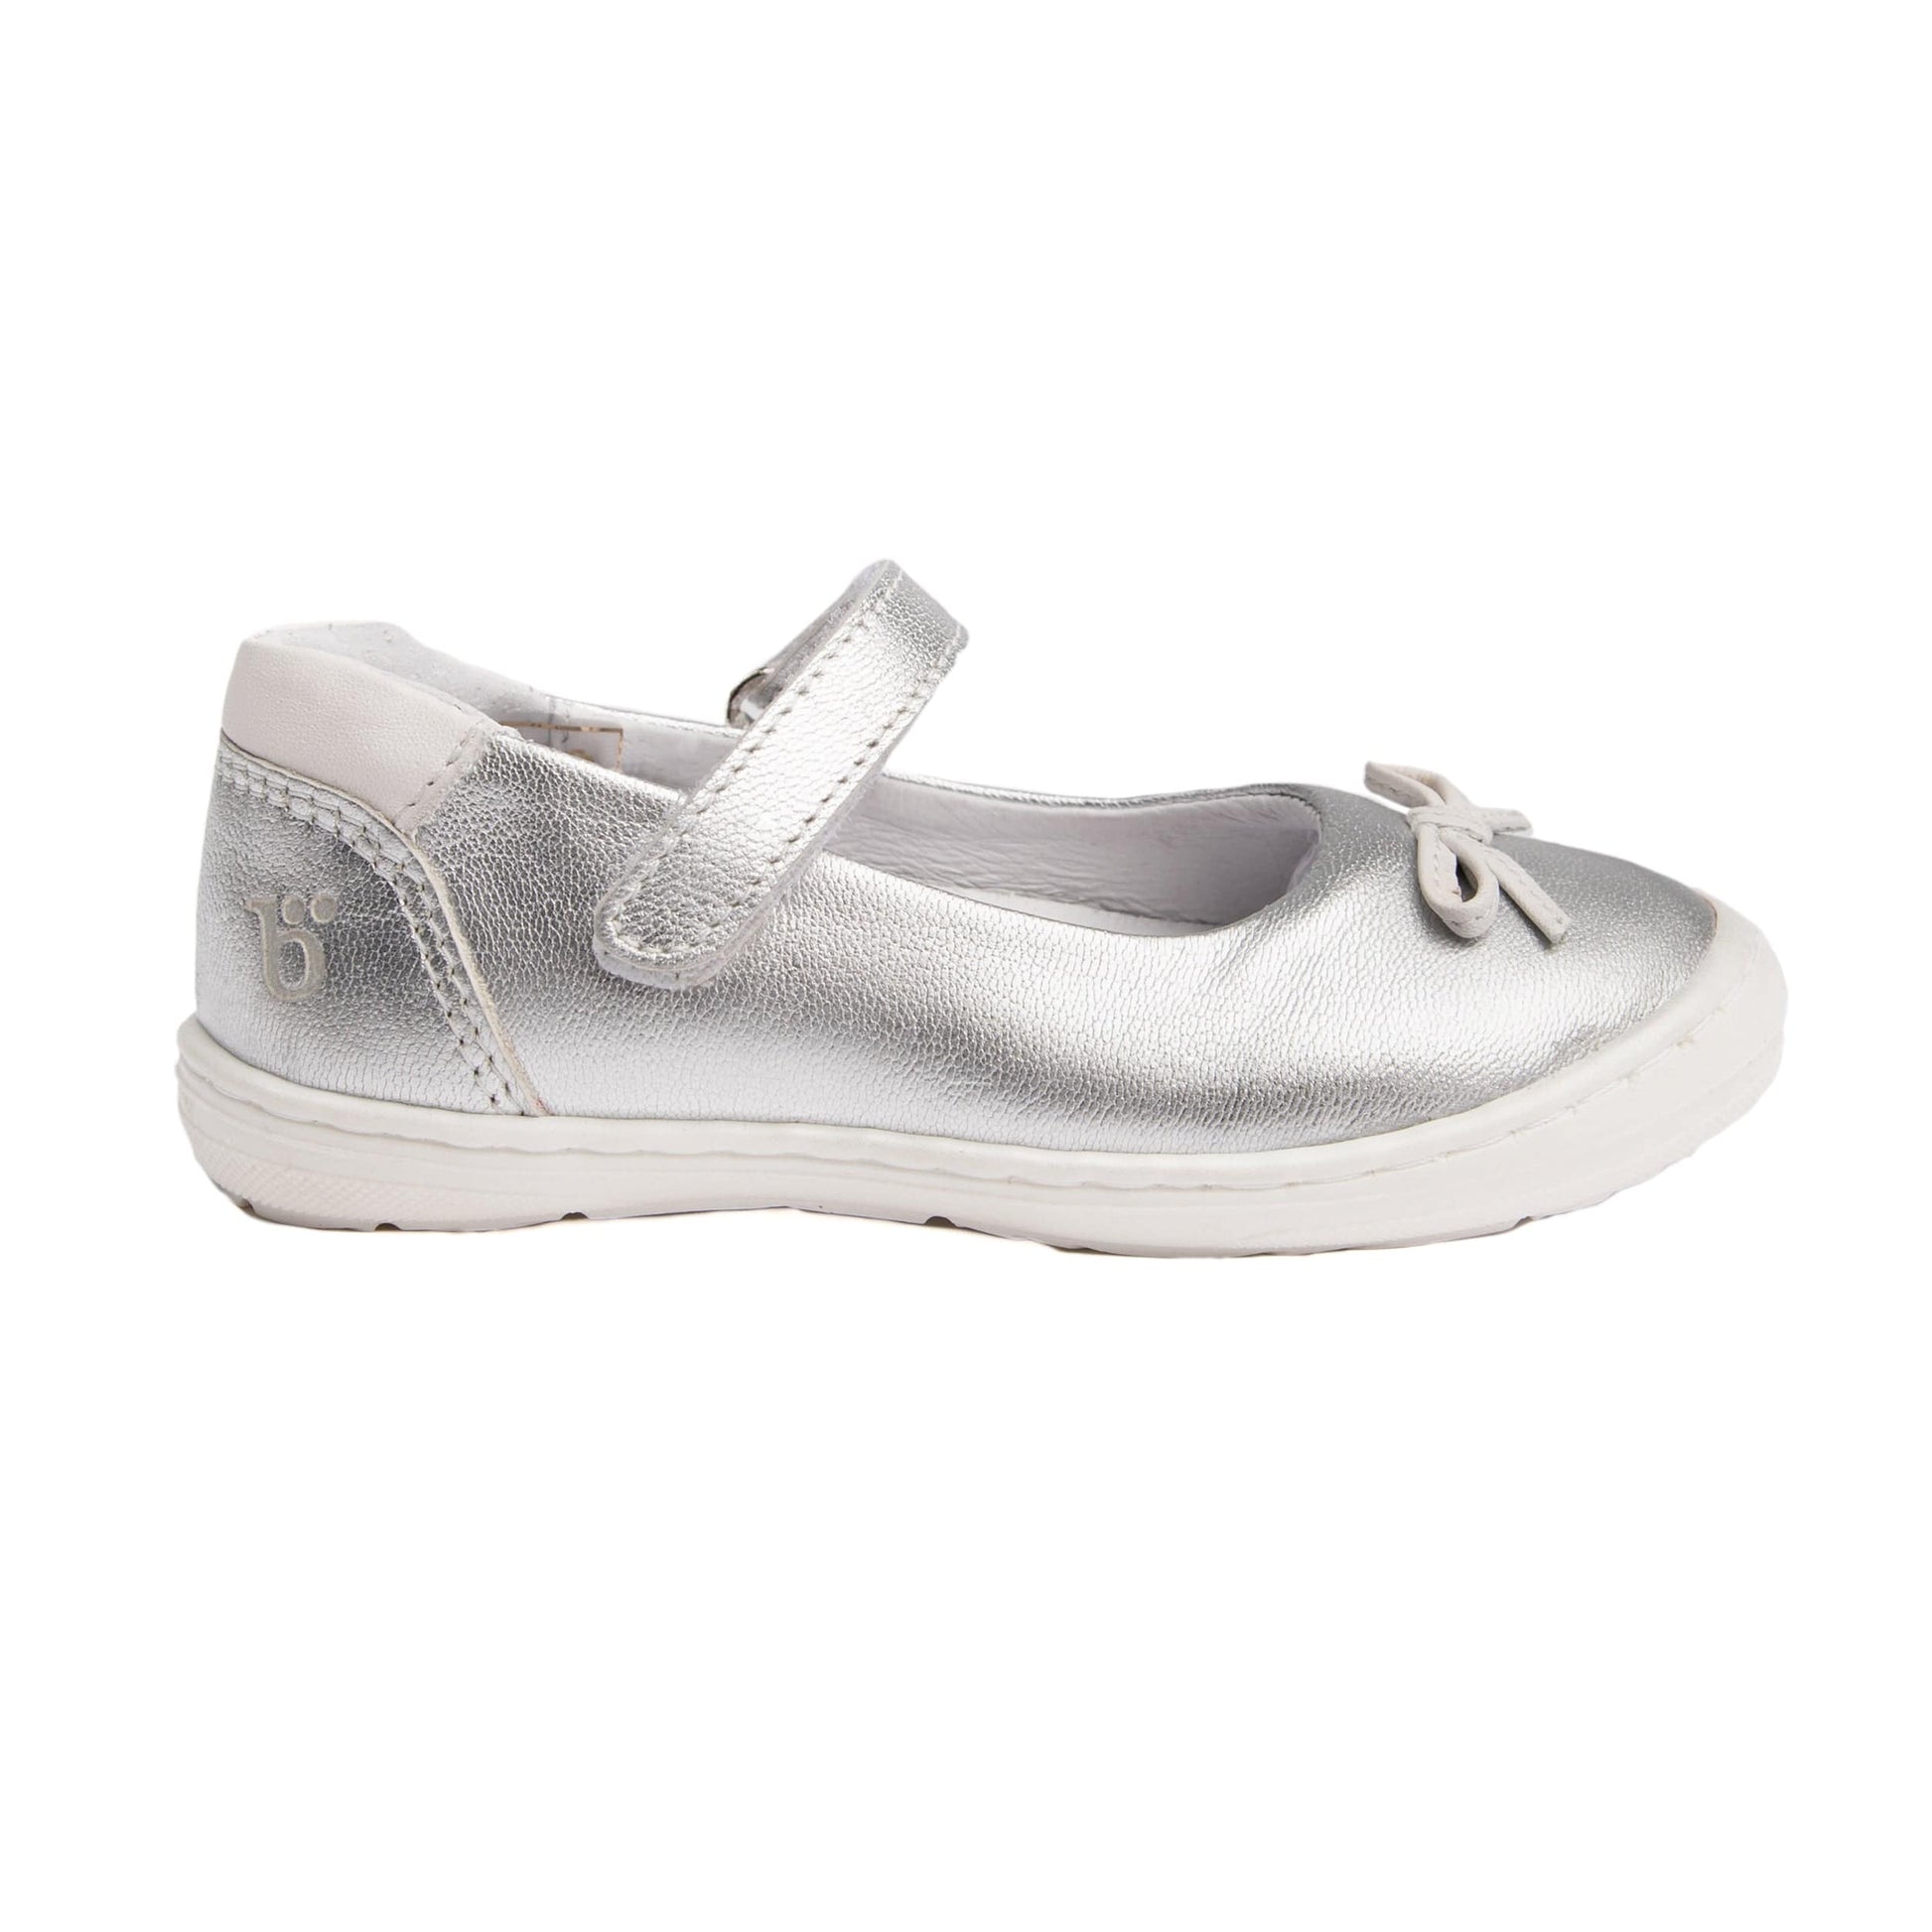 Benjie of Switzerland Footwear Silver leather ballerina shoe